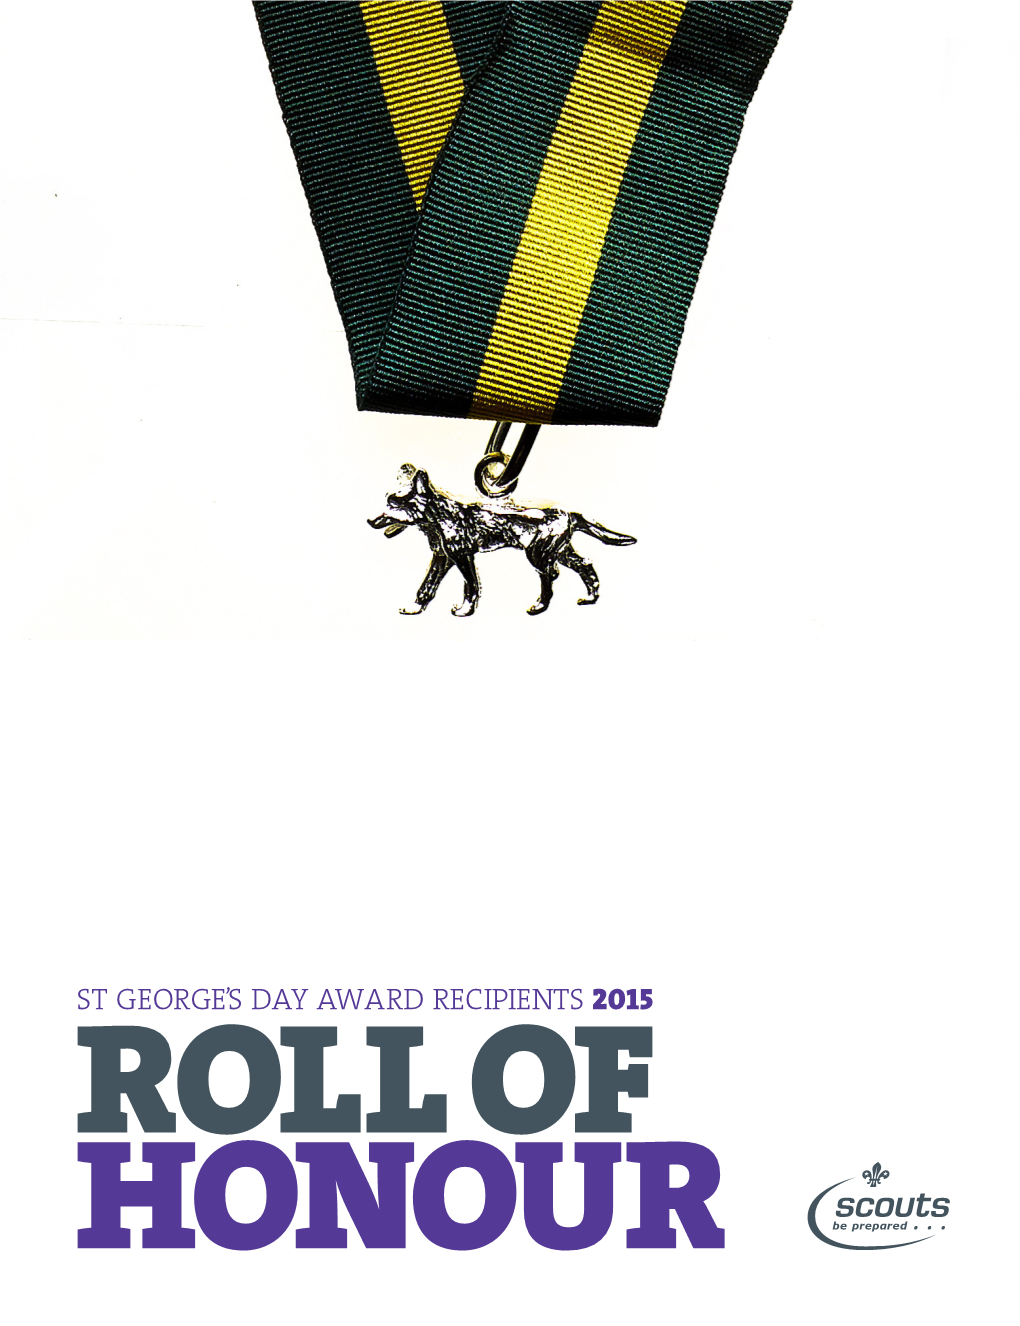 St George's Day Award Recipients 2015